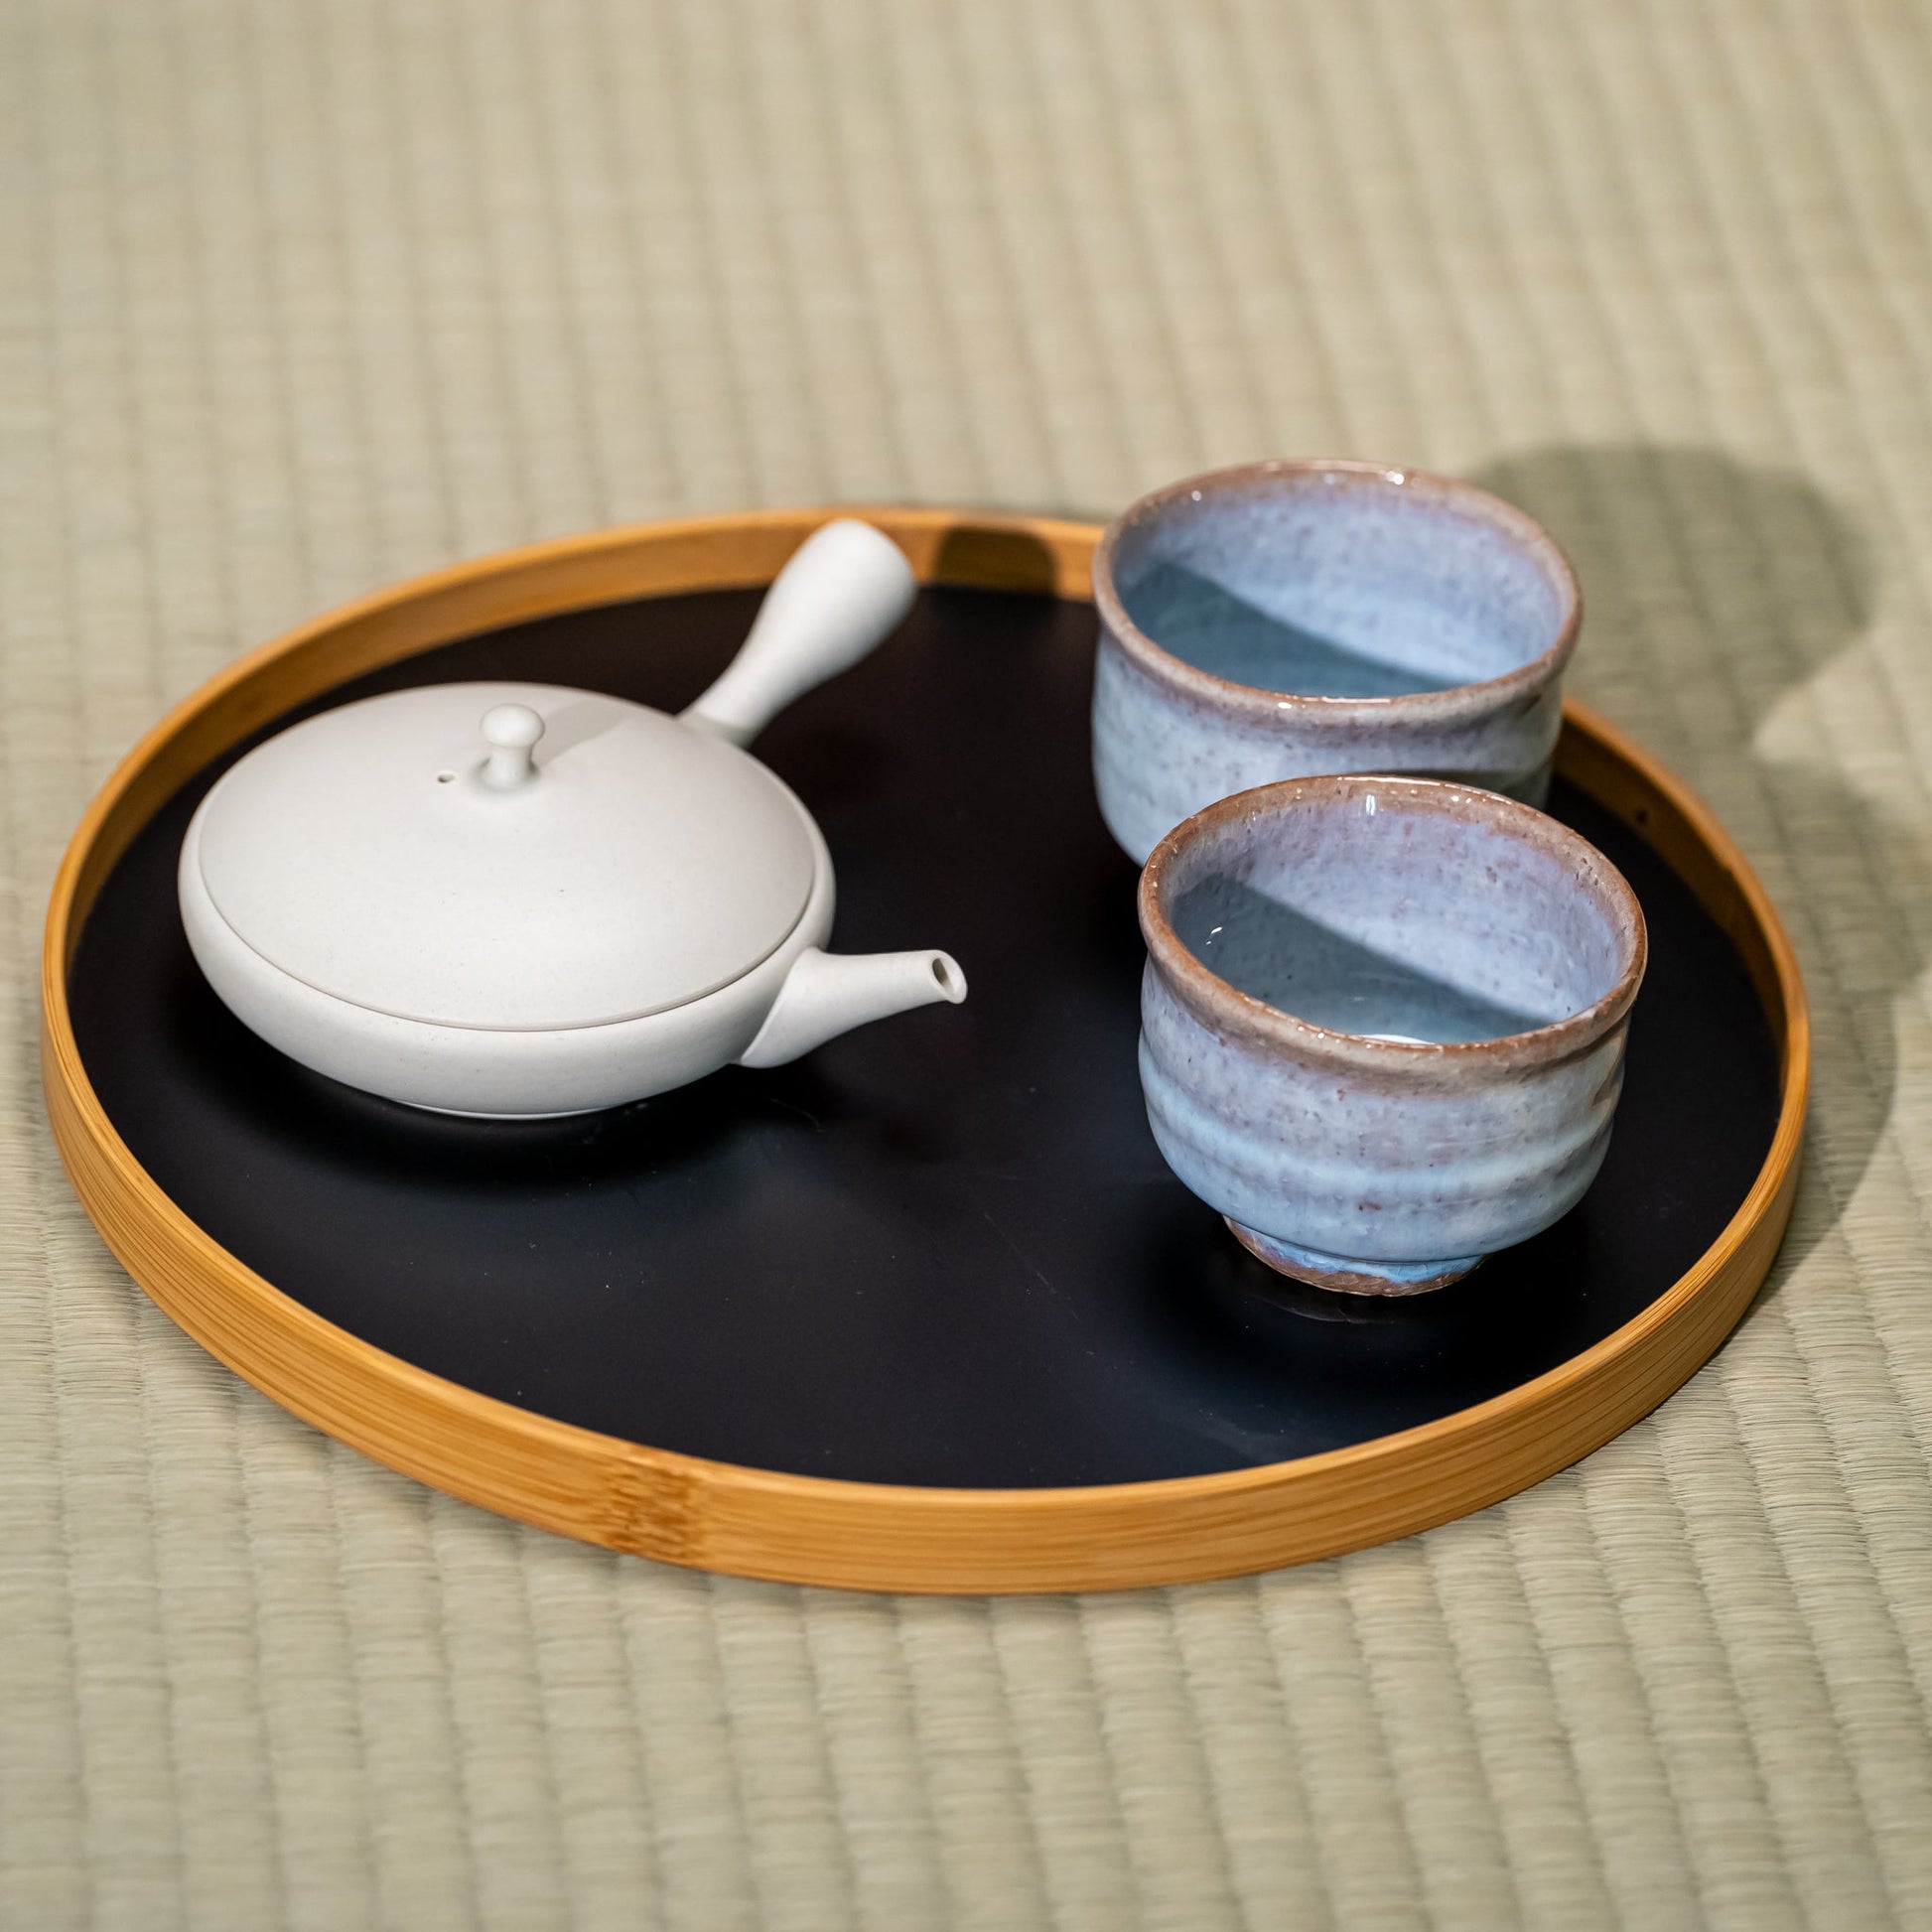 A Japanese ceramic tea set on a bamboo tray